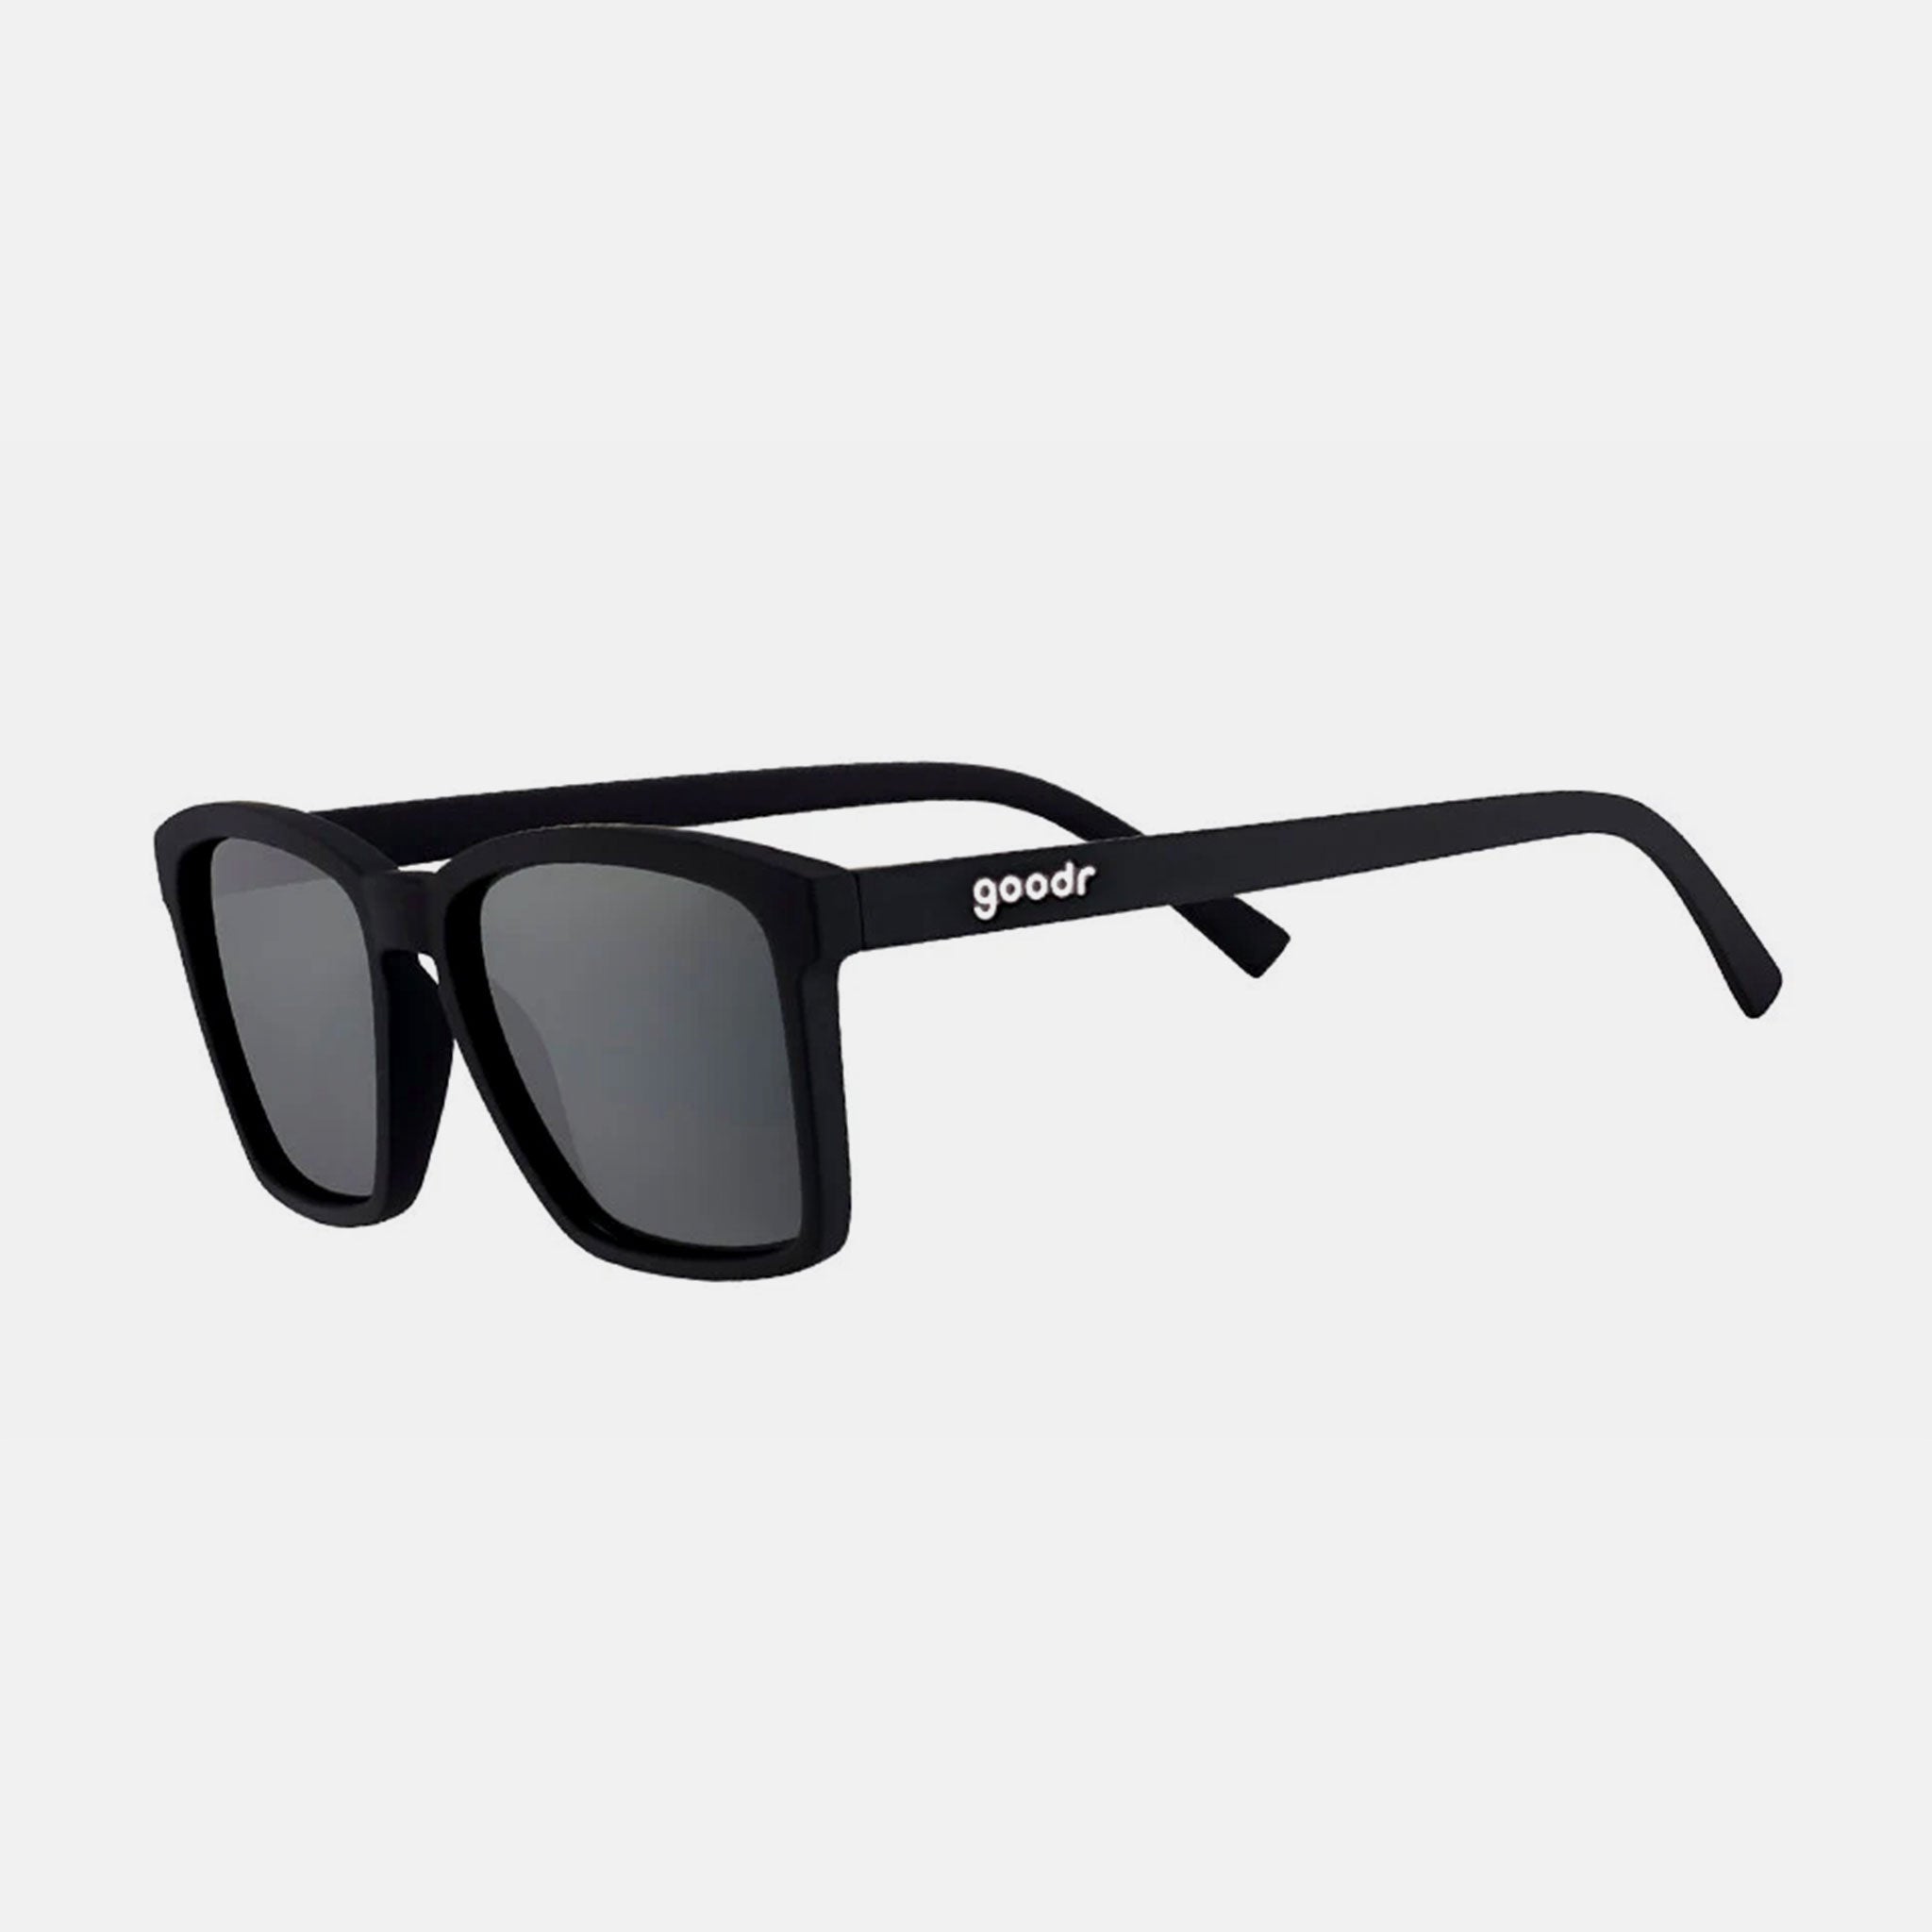 goodr-sunglasses-black-get-on-my-level_01.jpg